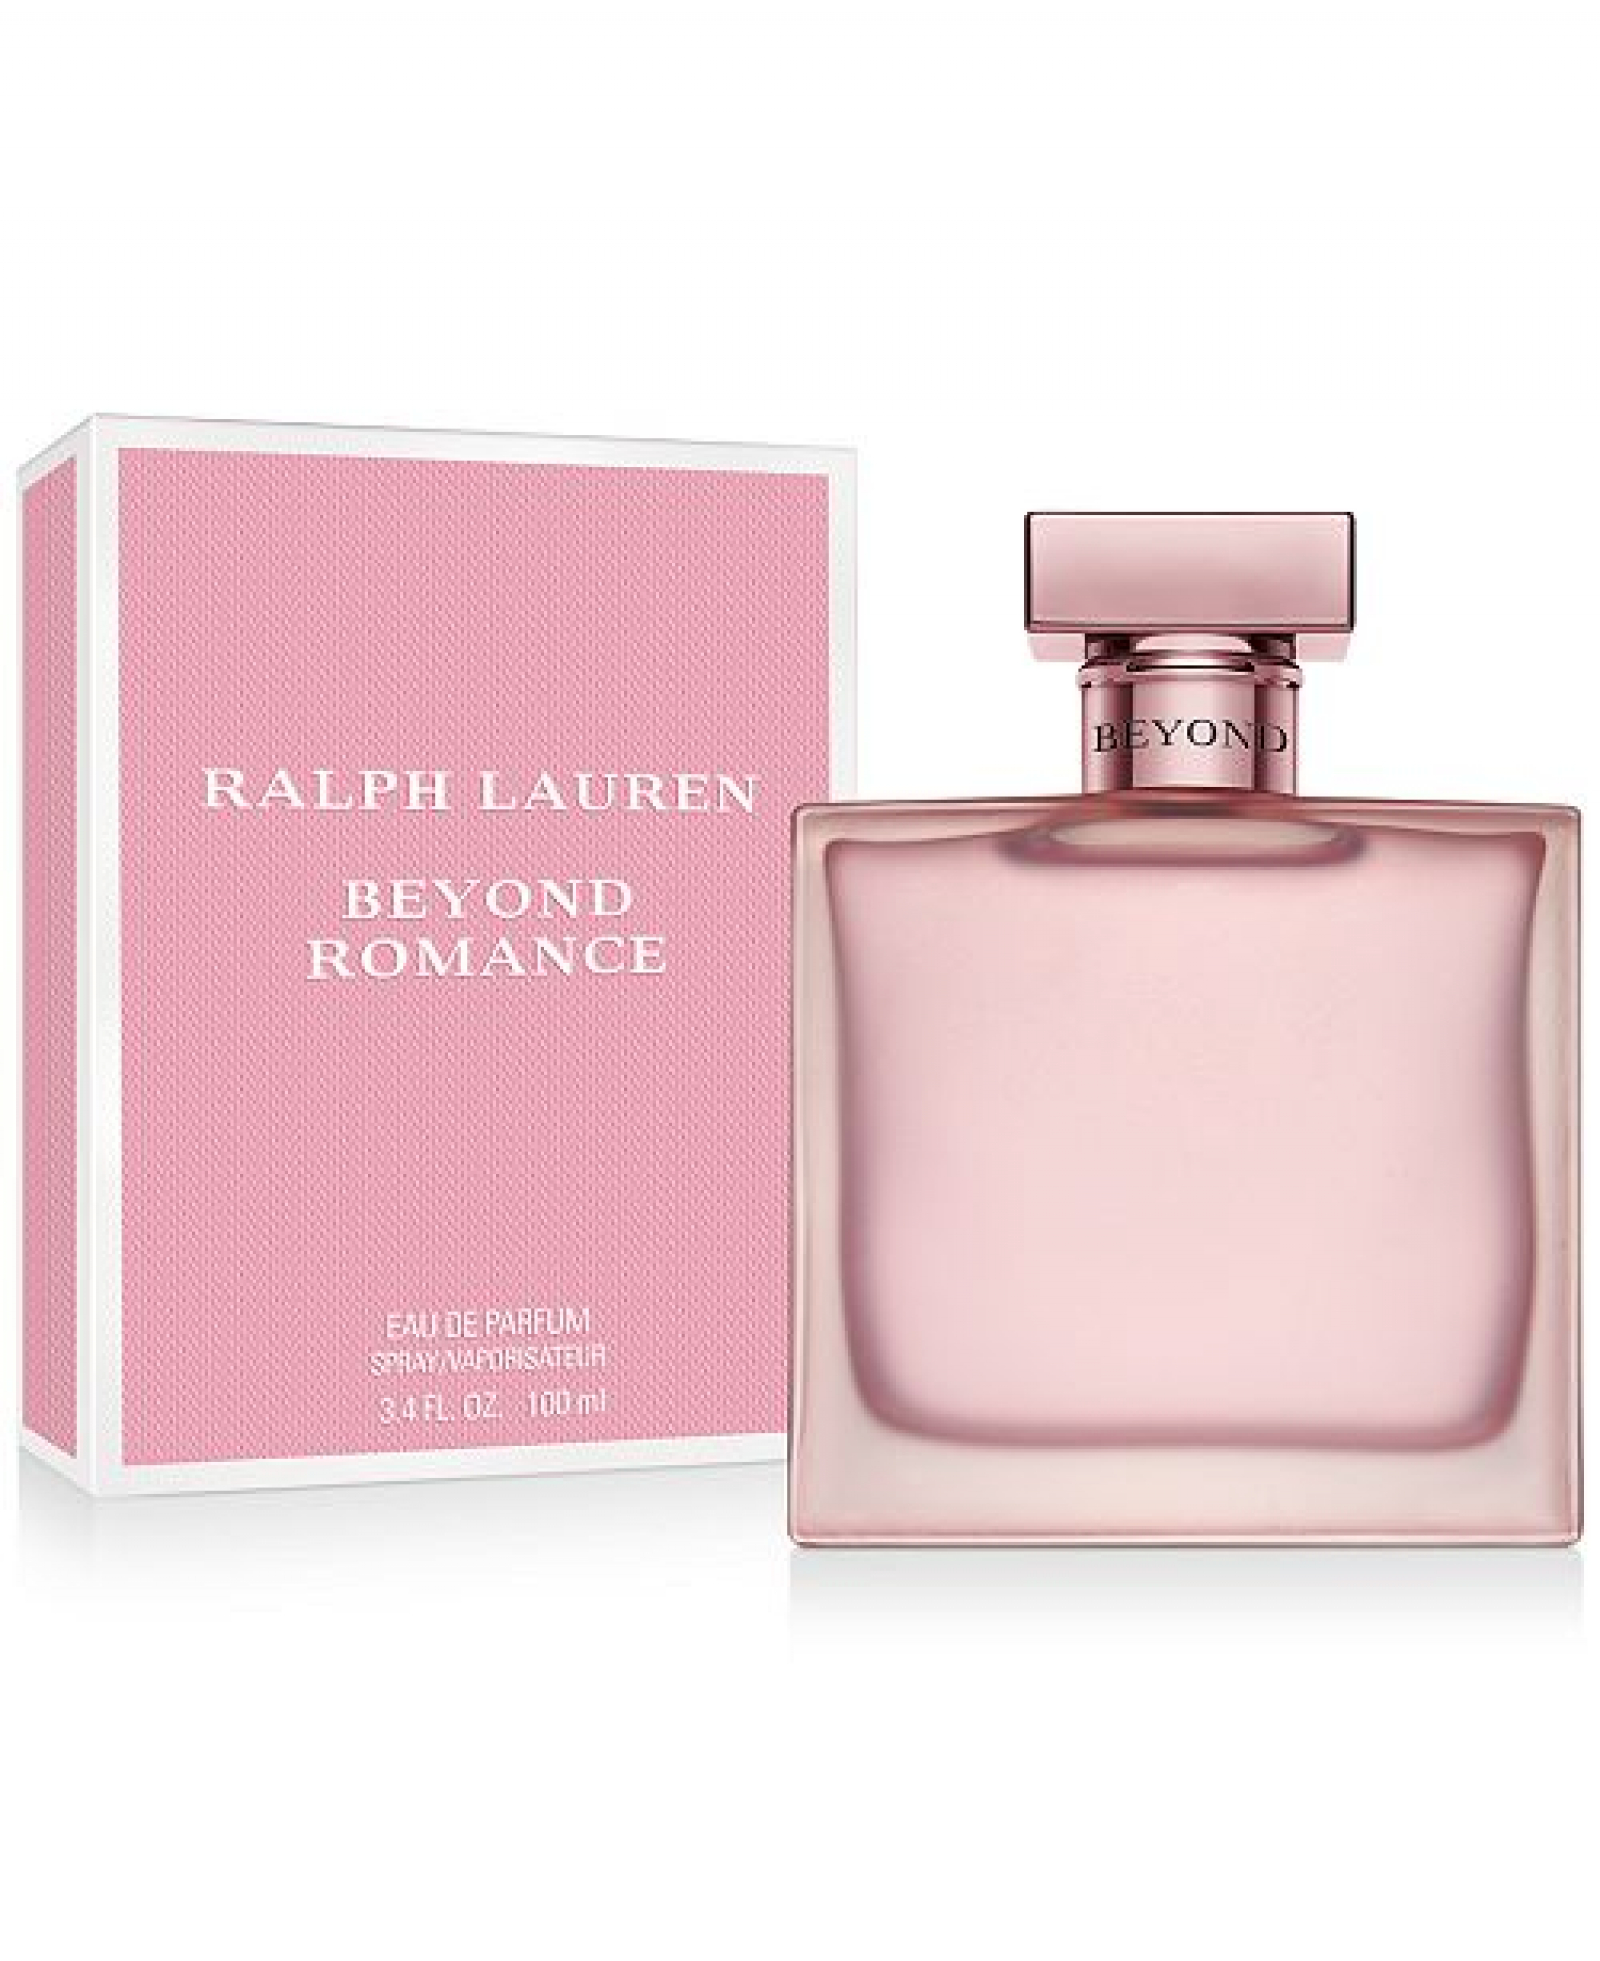 Actualizar 117+ imagen ralph lauren perfume beyond romance